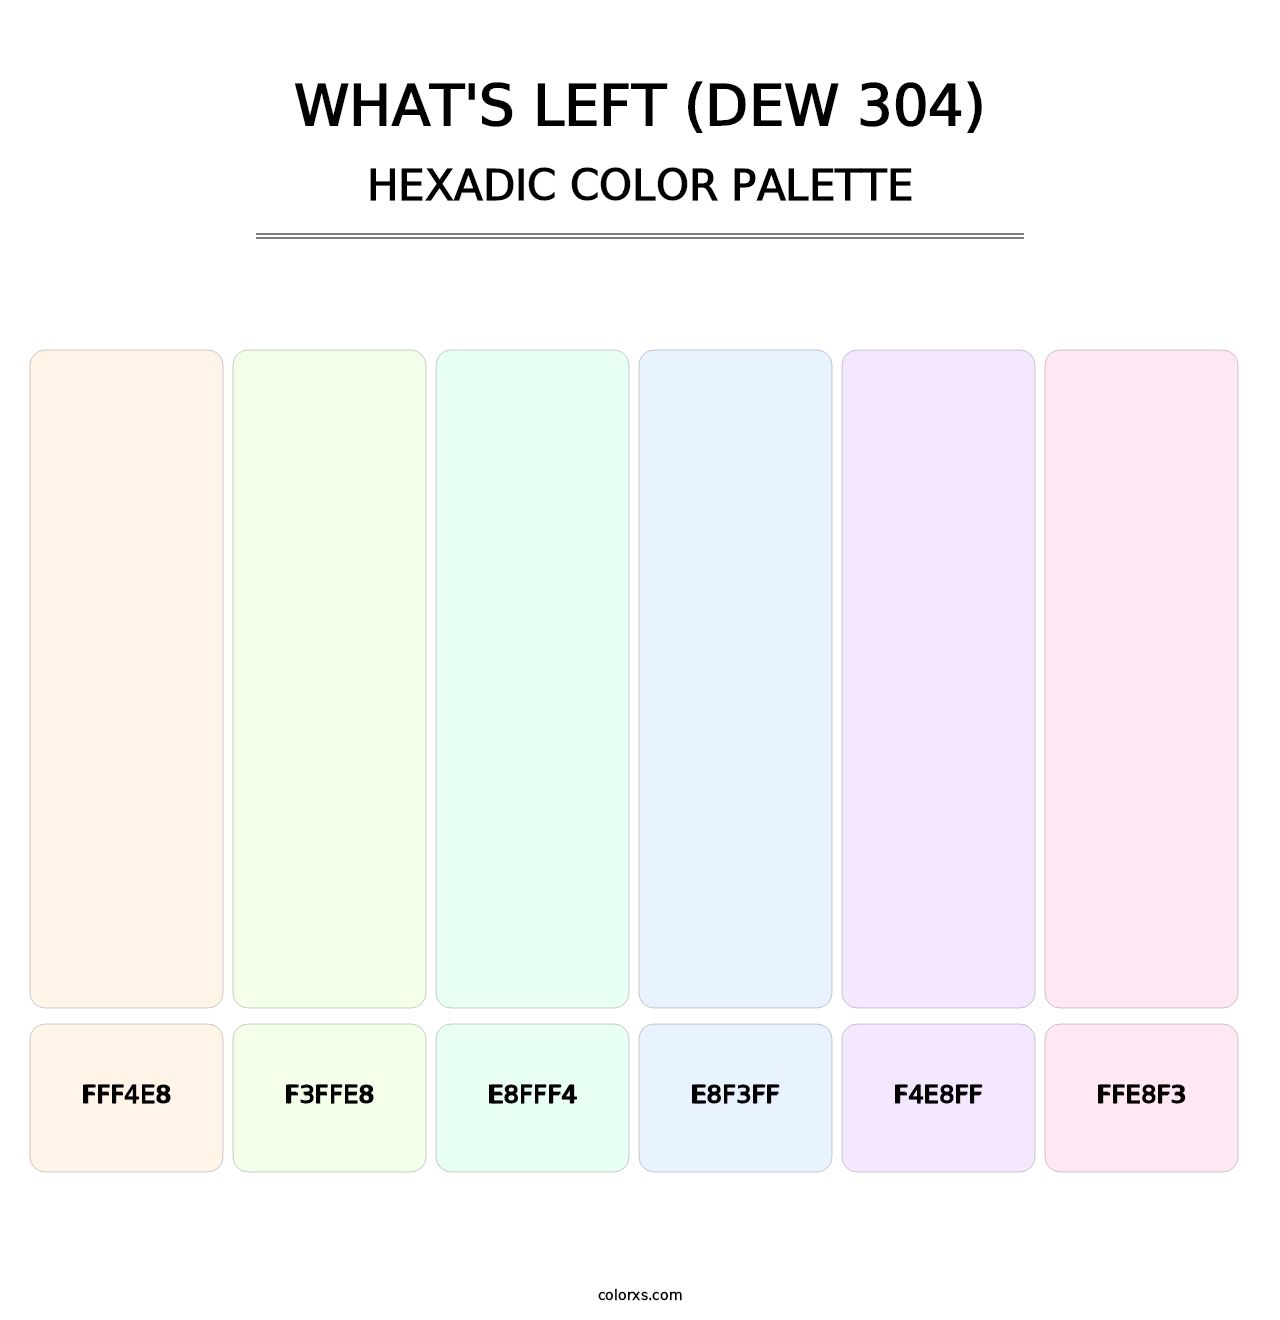 What's Left (DEW 304) - Hexadic Color Palette